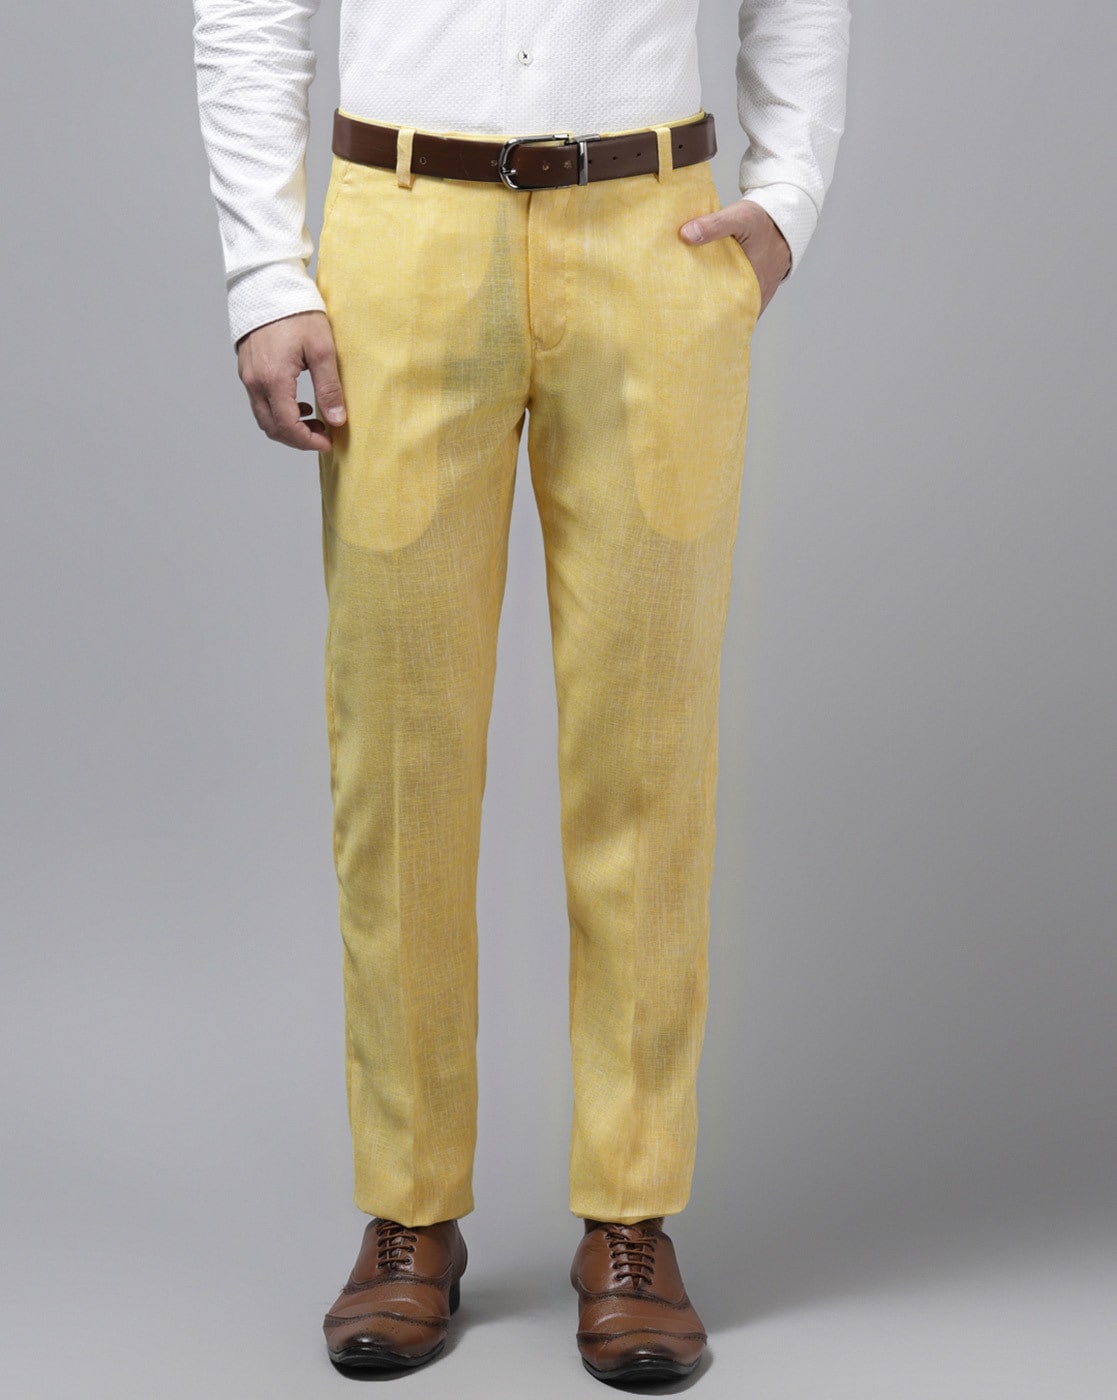 Shop Mustard Yellow Pants For Men online | Lazada.com.ph